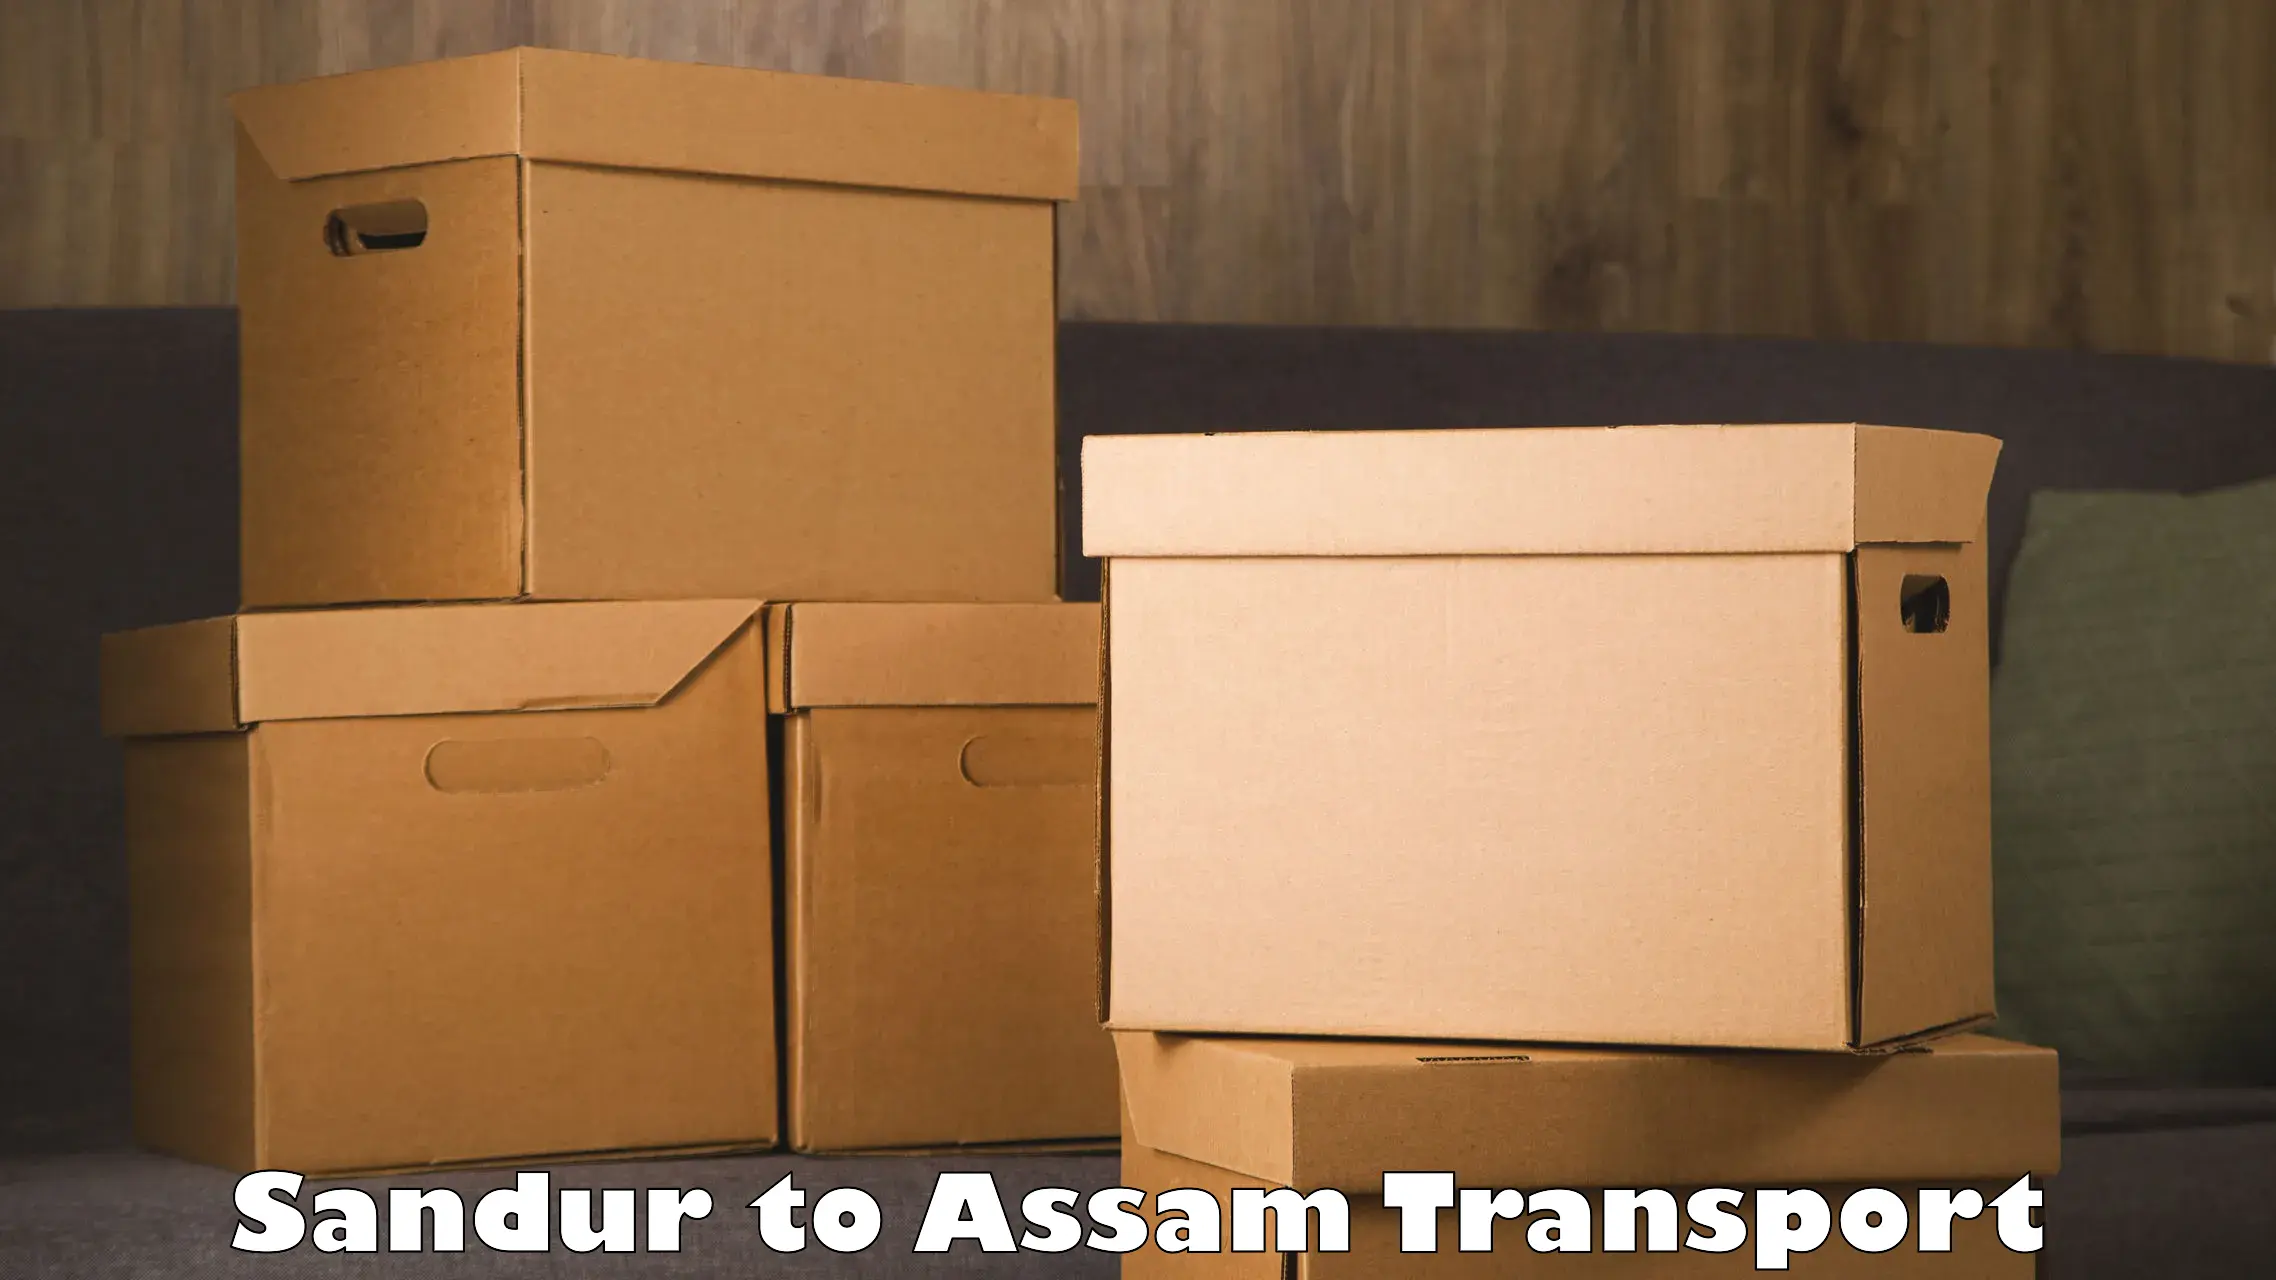 Nearby transport service Sandur to Lala Assam